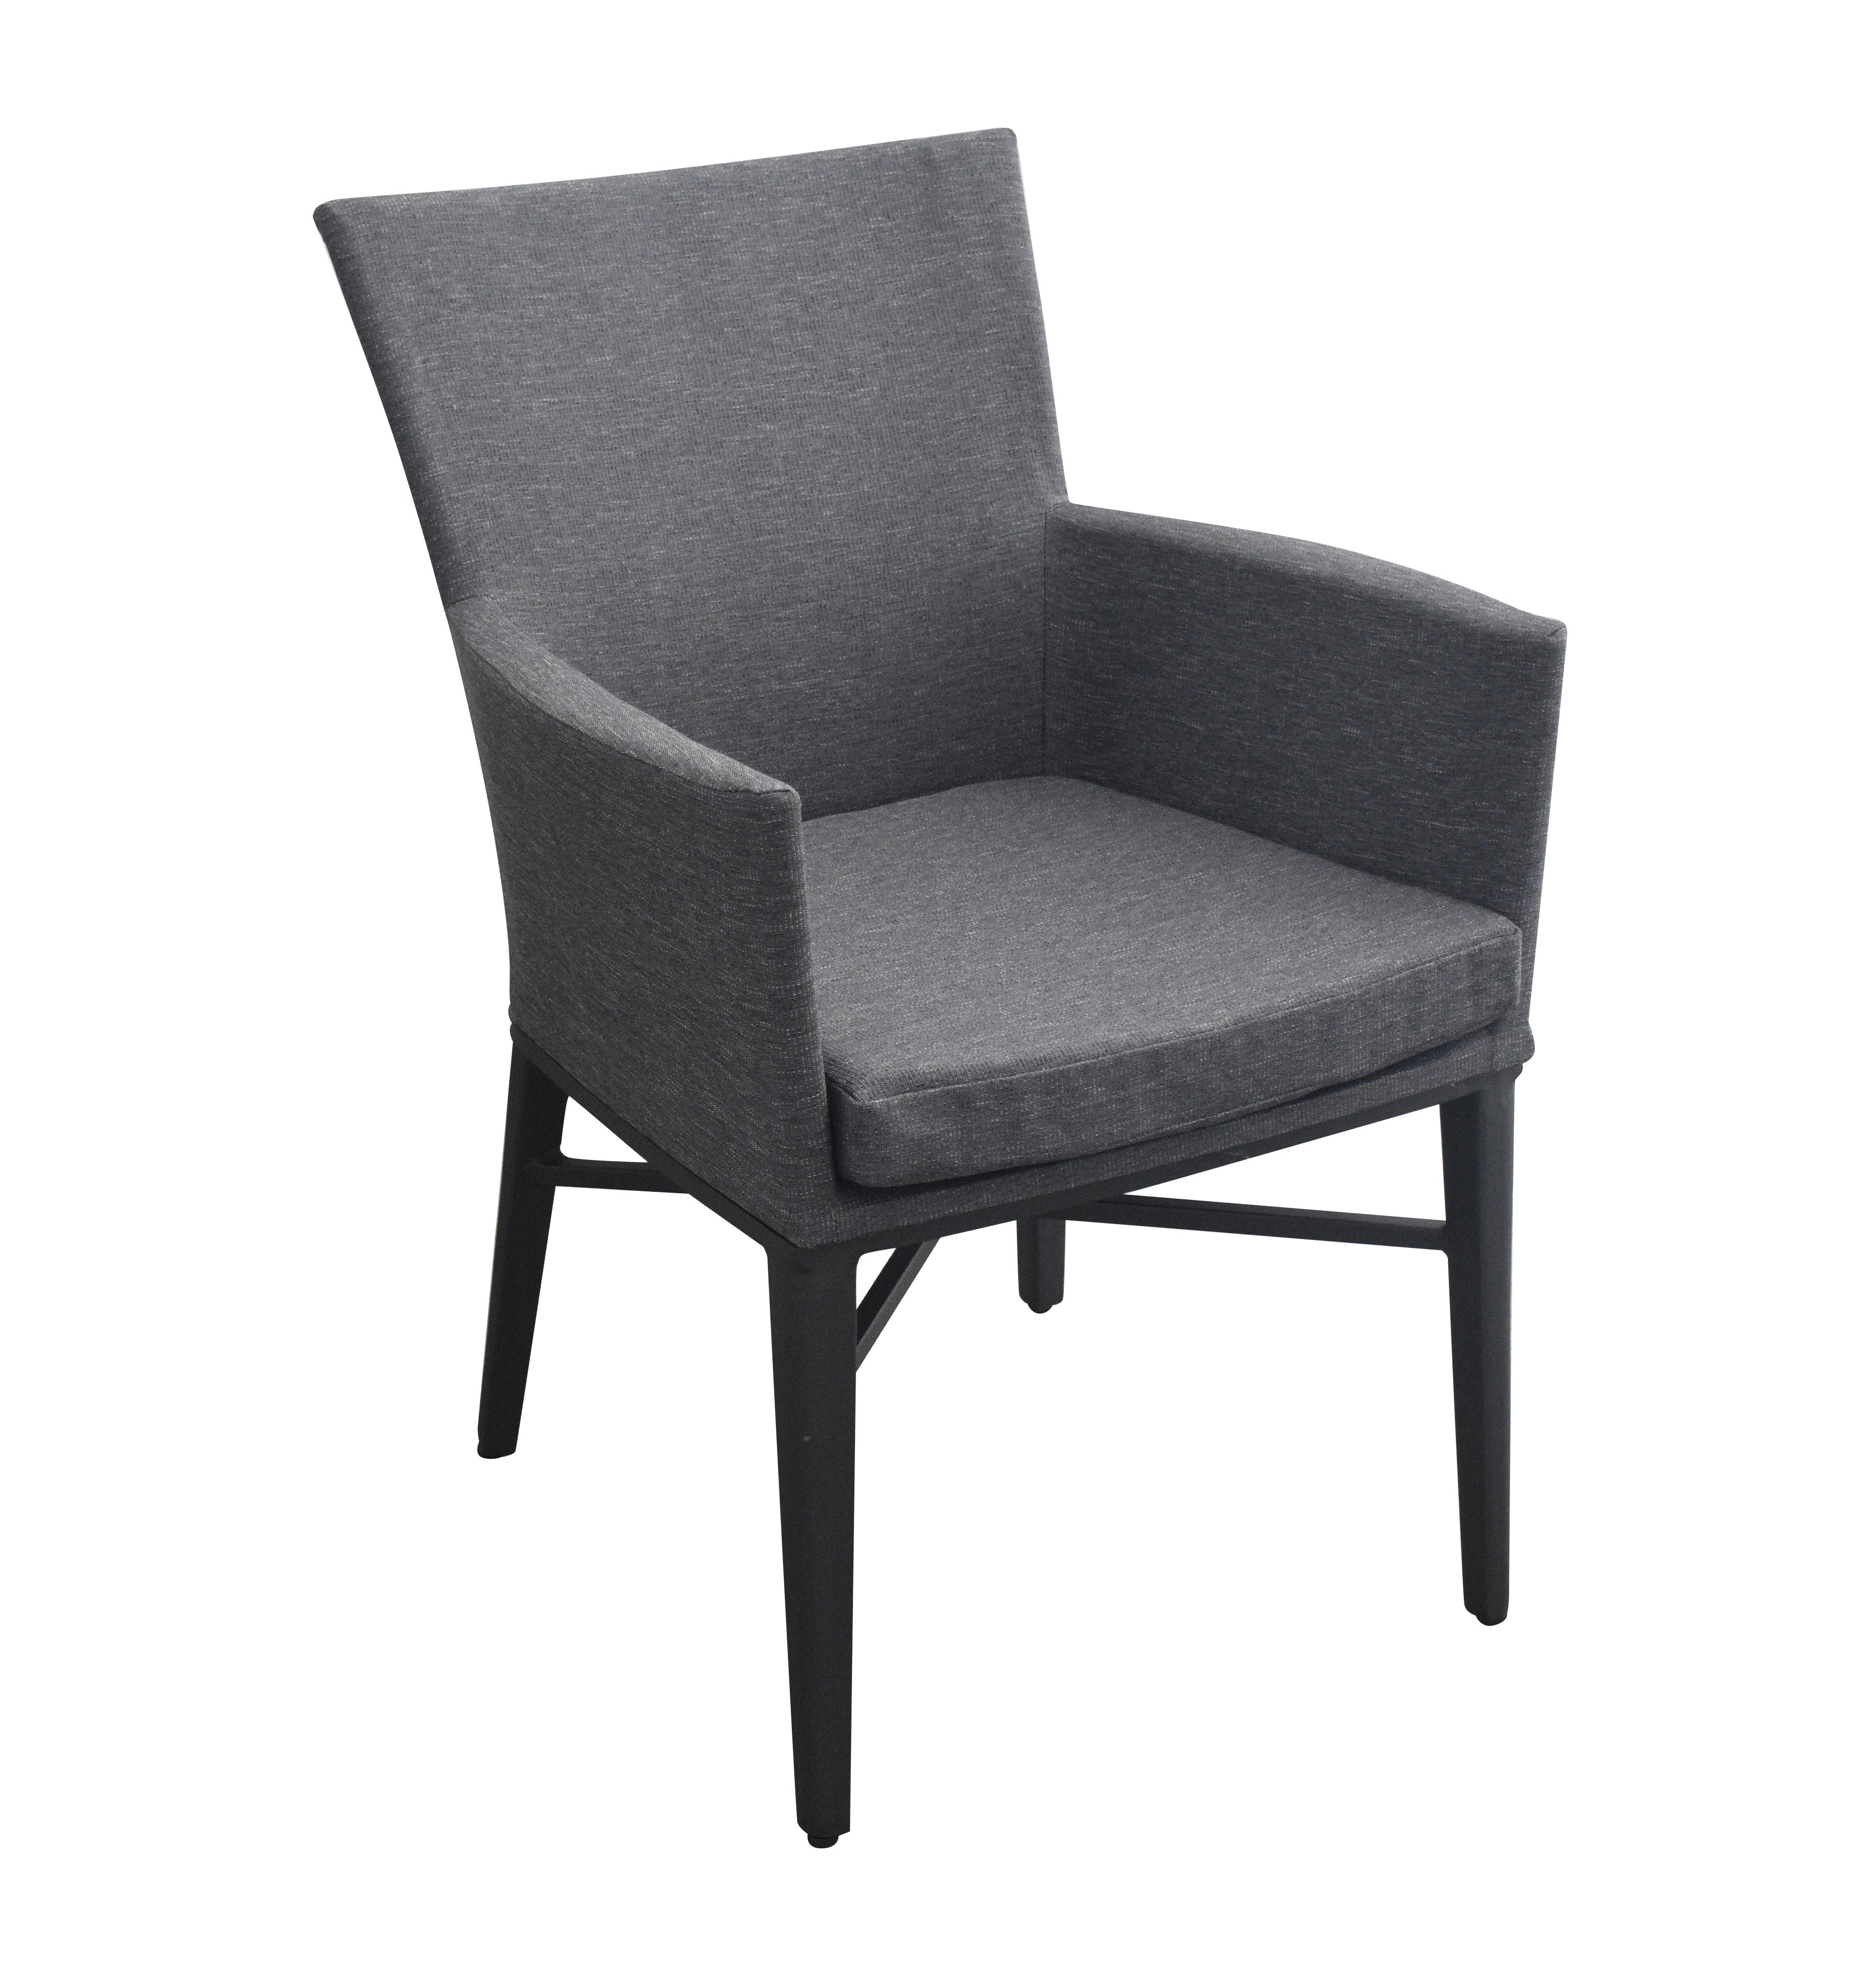 PatioZone Armchair with Quick-Dry Padded Textilene/Olefin Cushion and Aluminum Frame (MOSS-0818NC) - Black / Heather Grey